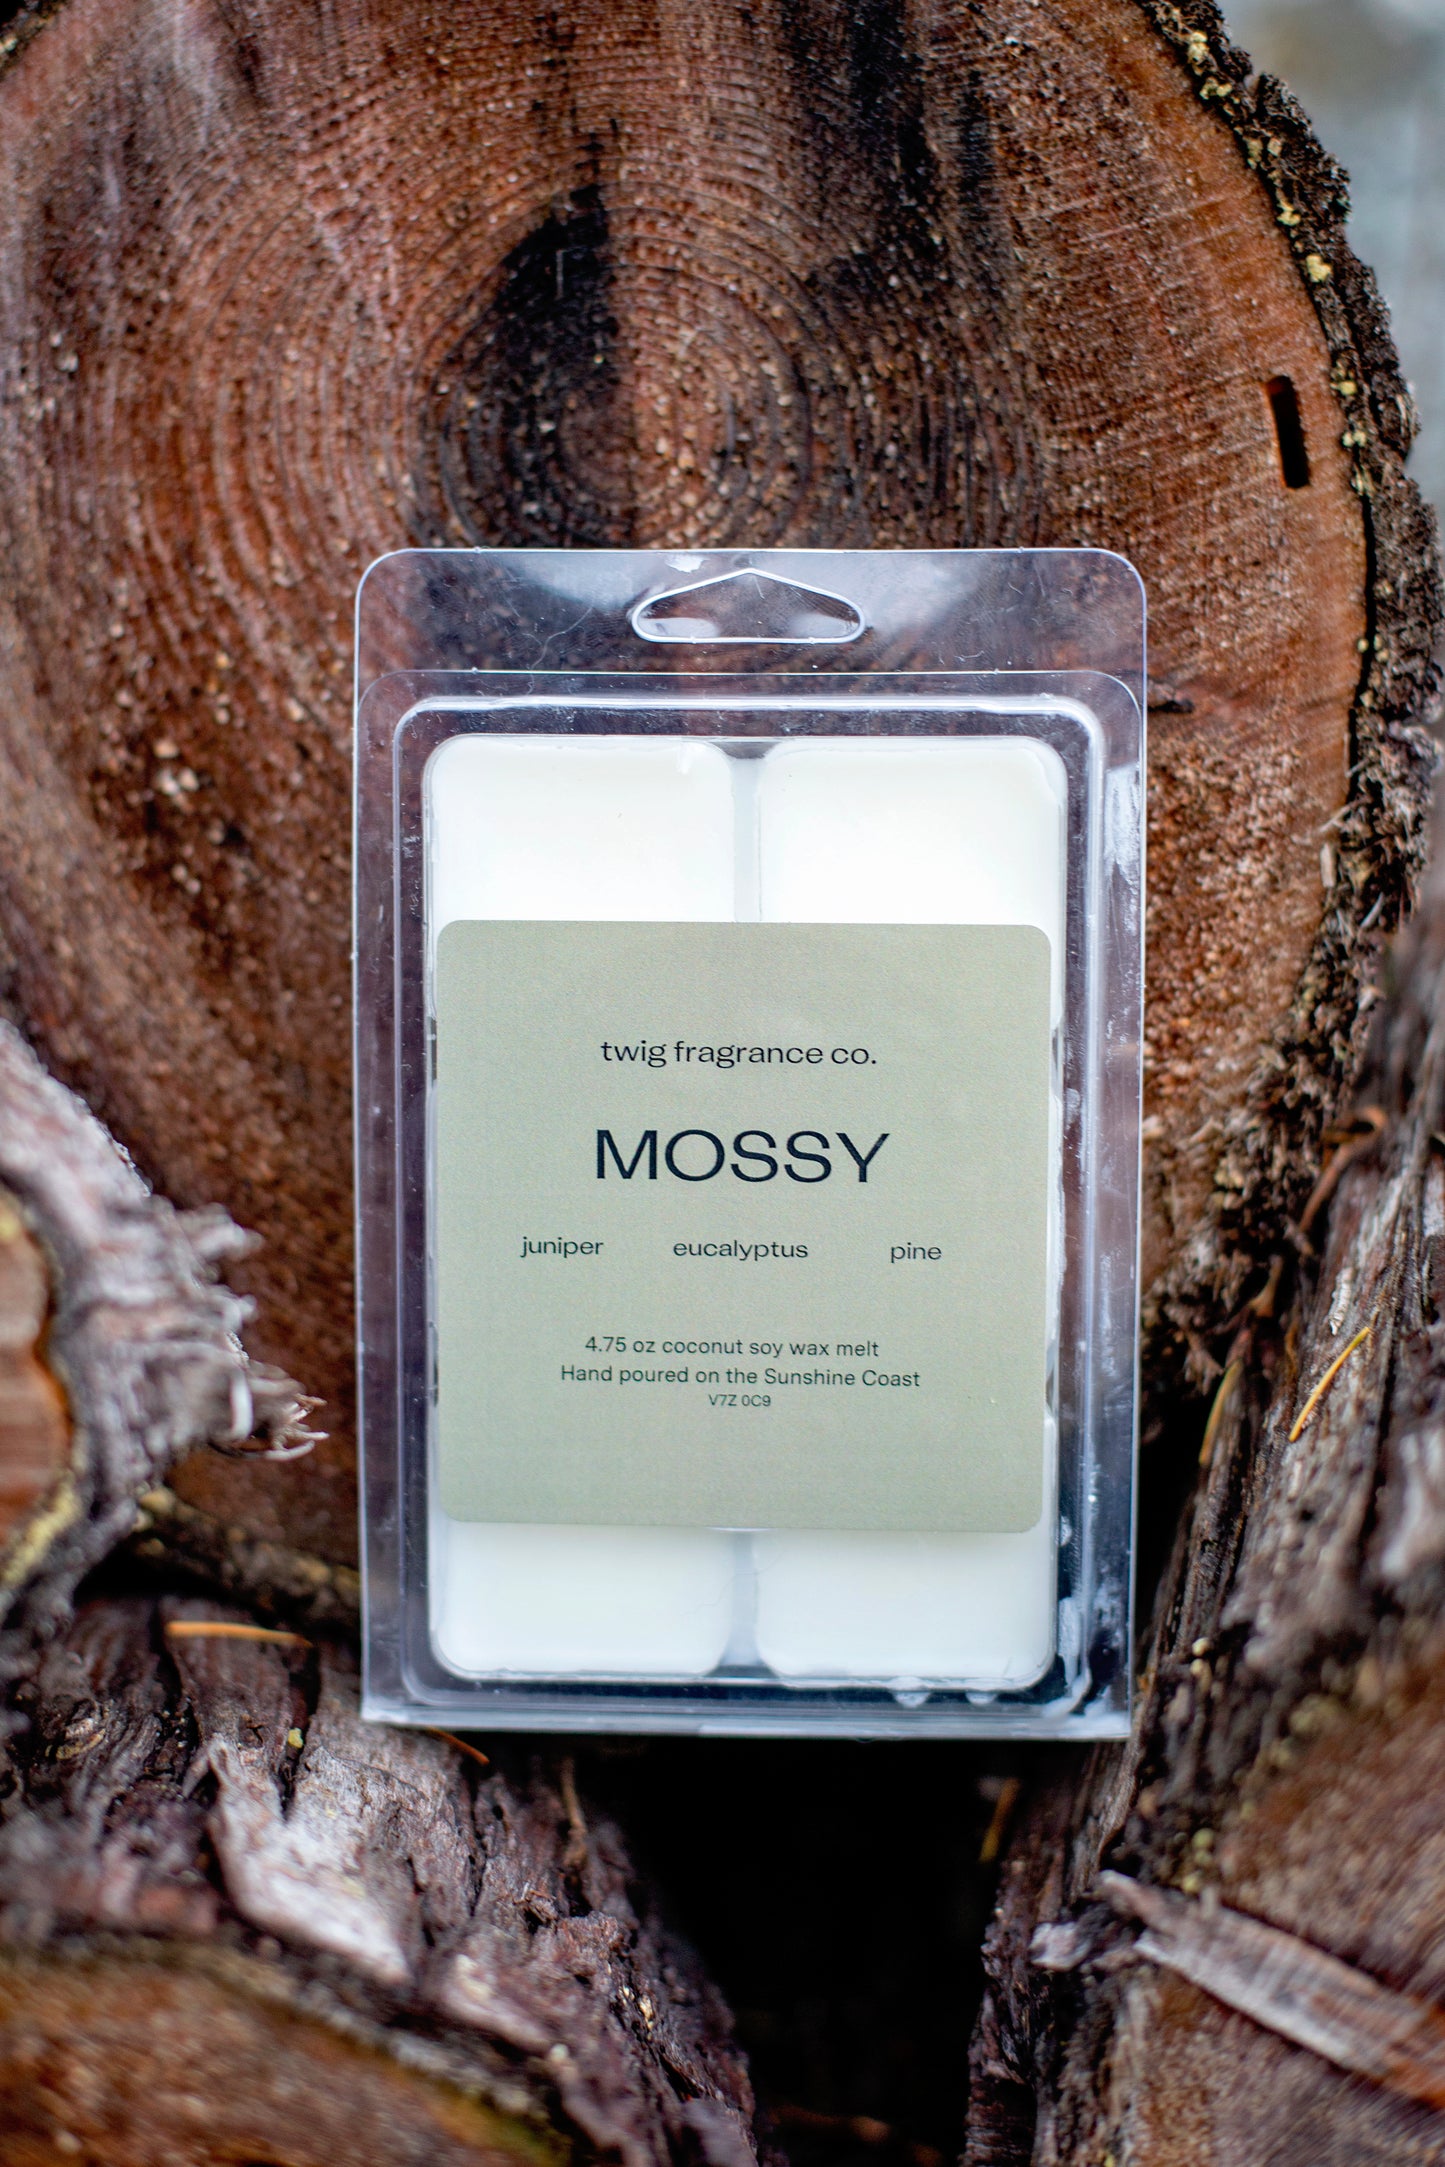 Mossy 2.43 oz Coconut Soy Wax Melt